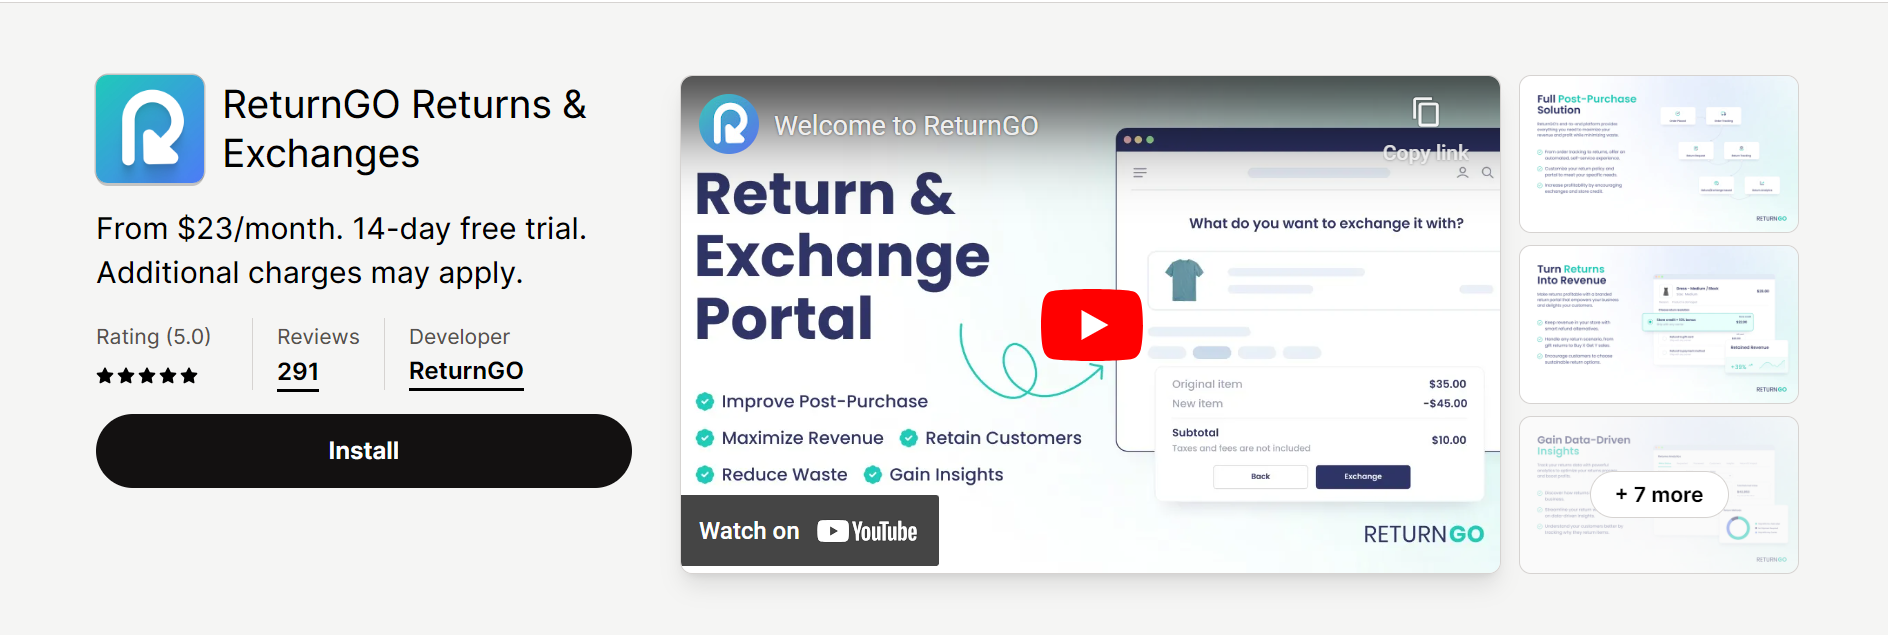 ReturnGO Returns & Exchanges